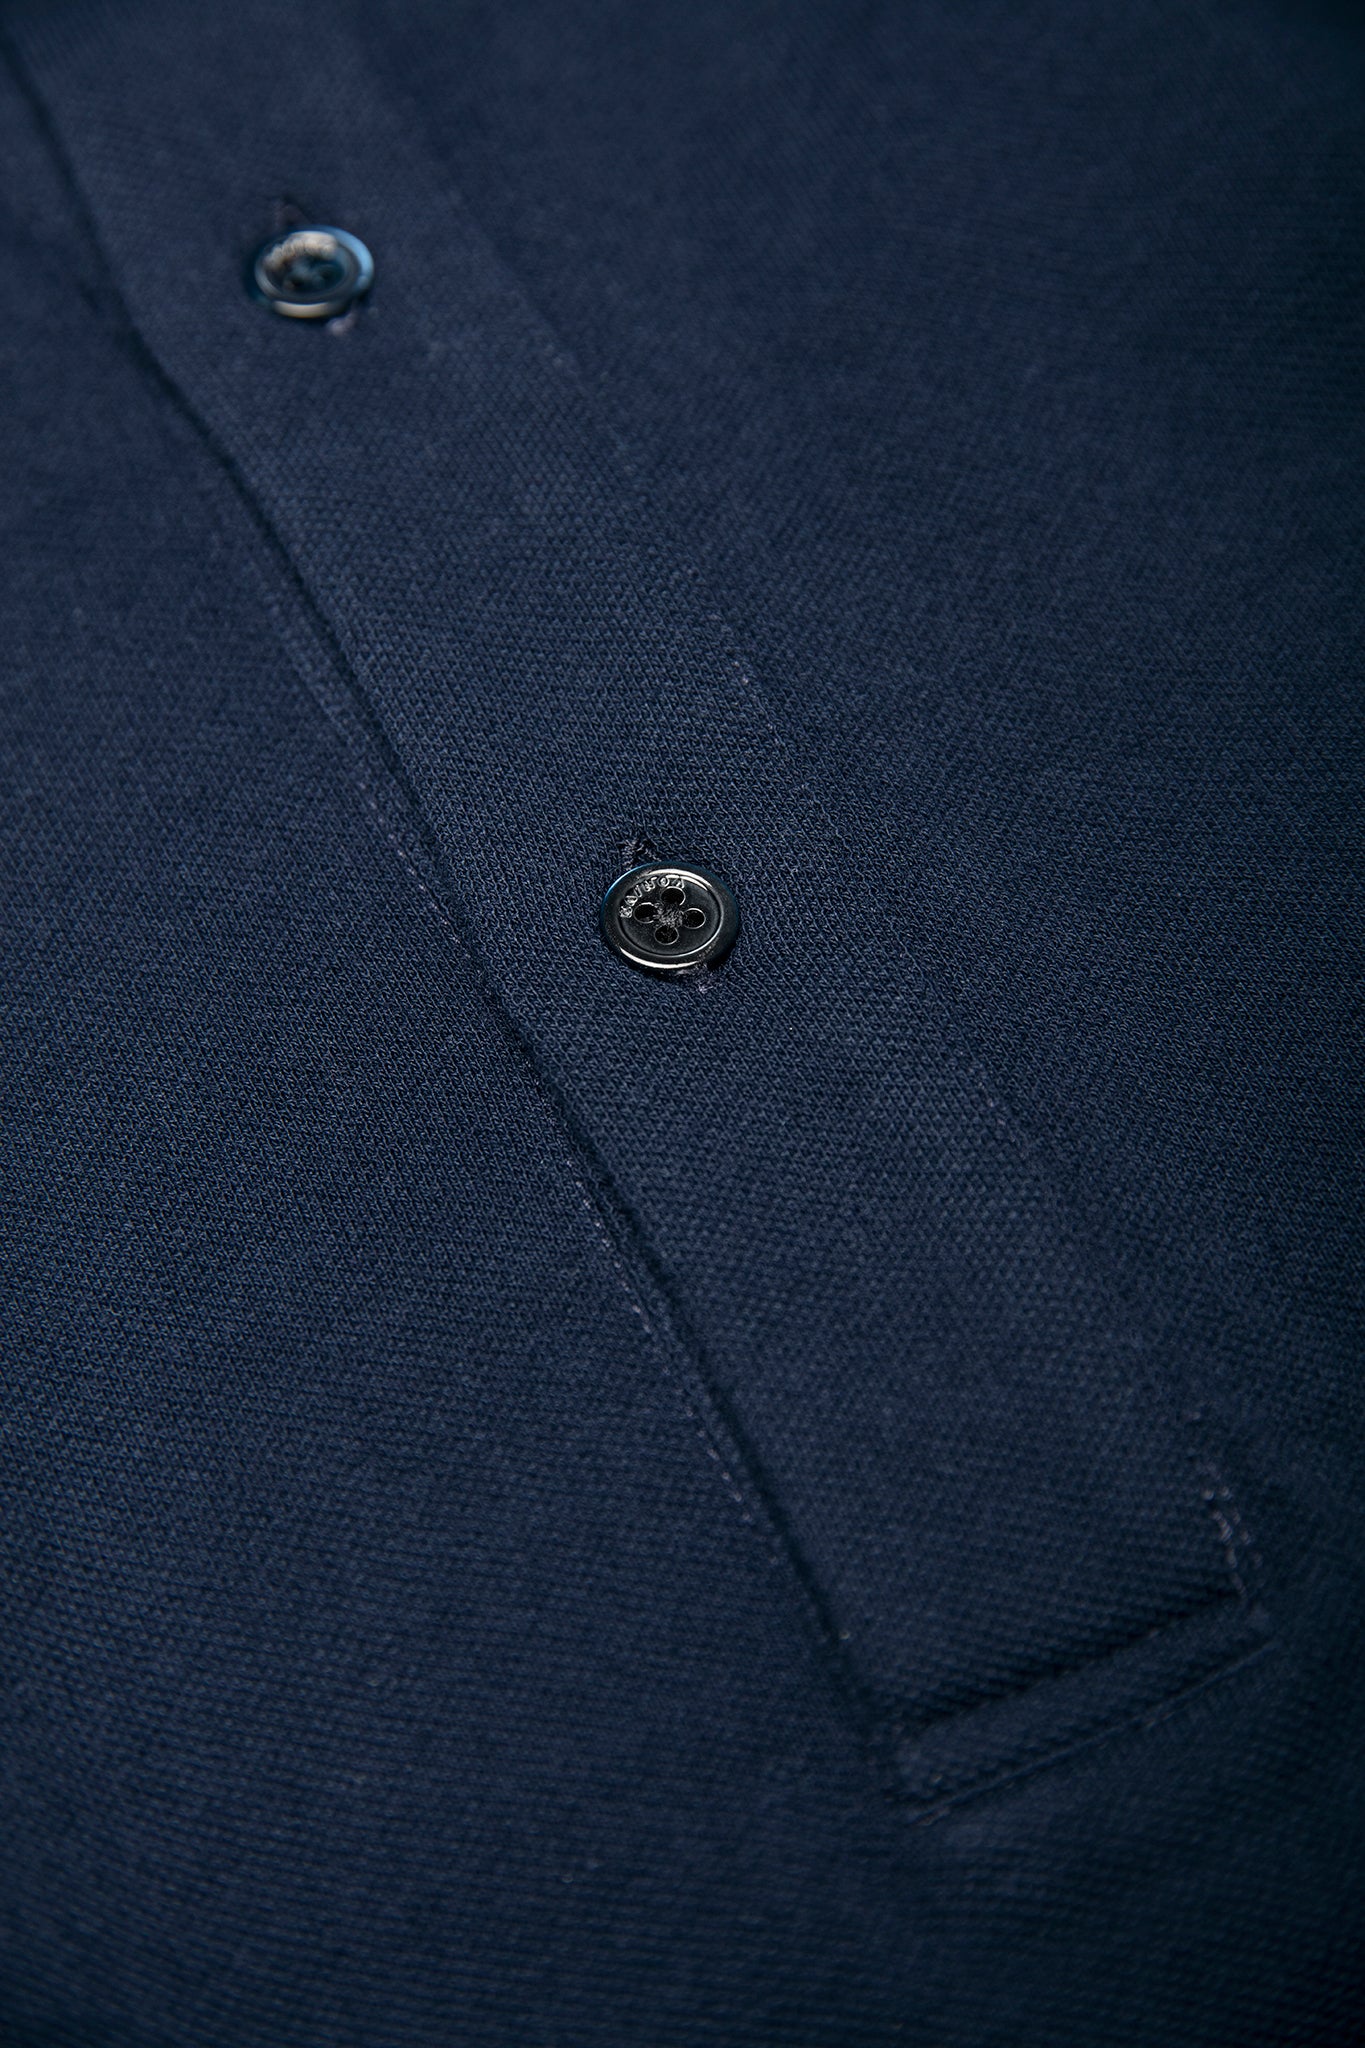 Jean long-sleeved polo in compact fine piquet (dark blue)